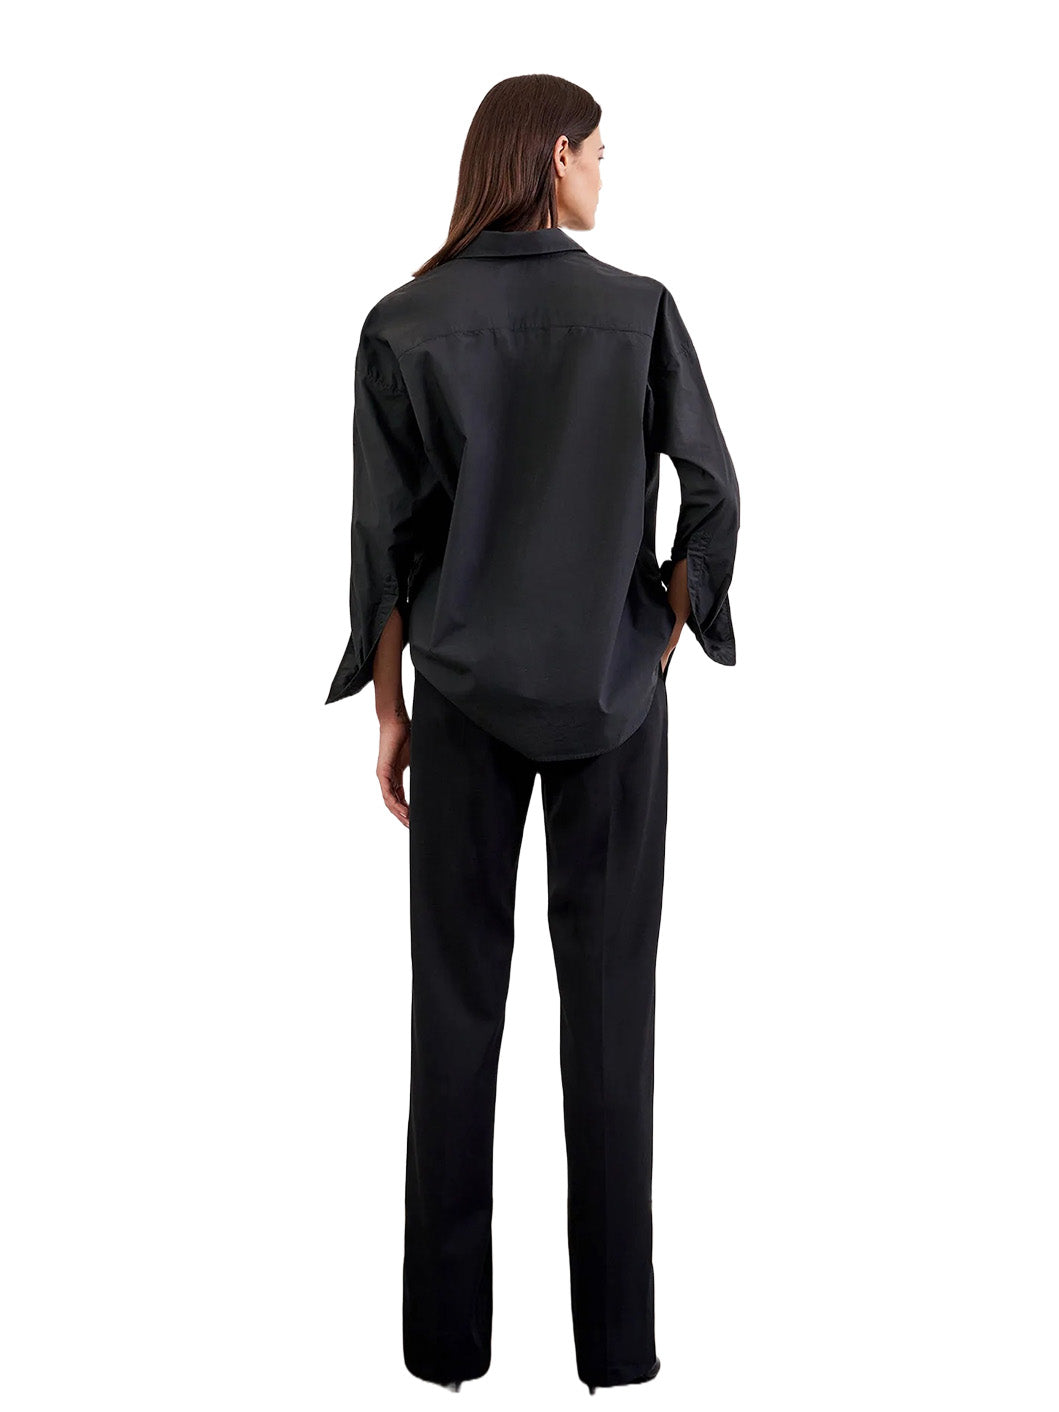 Mael Oversized Shirt in Black